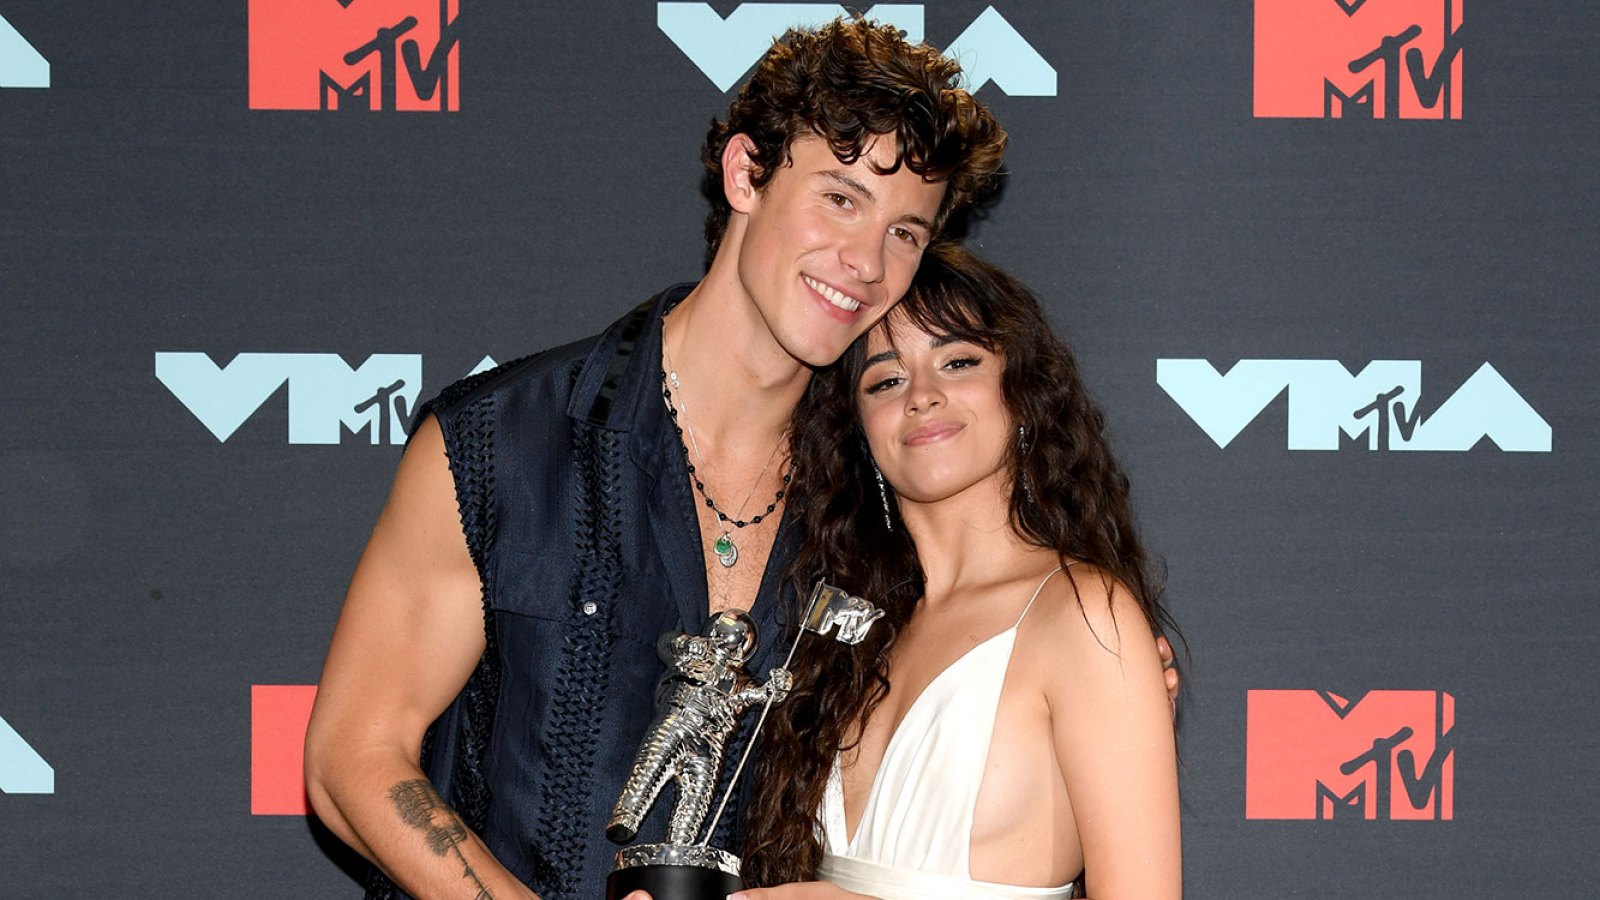 Shawn Mendes and Camila Cabello Holding MTV Award